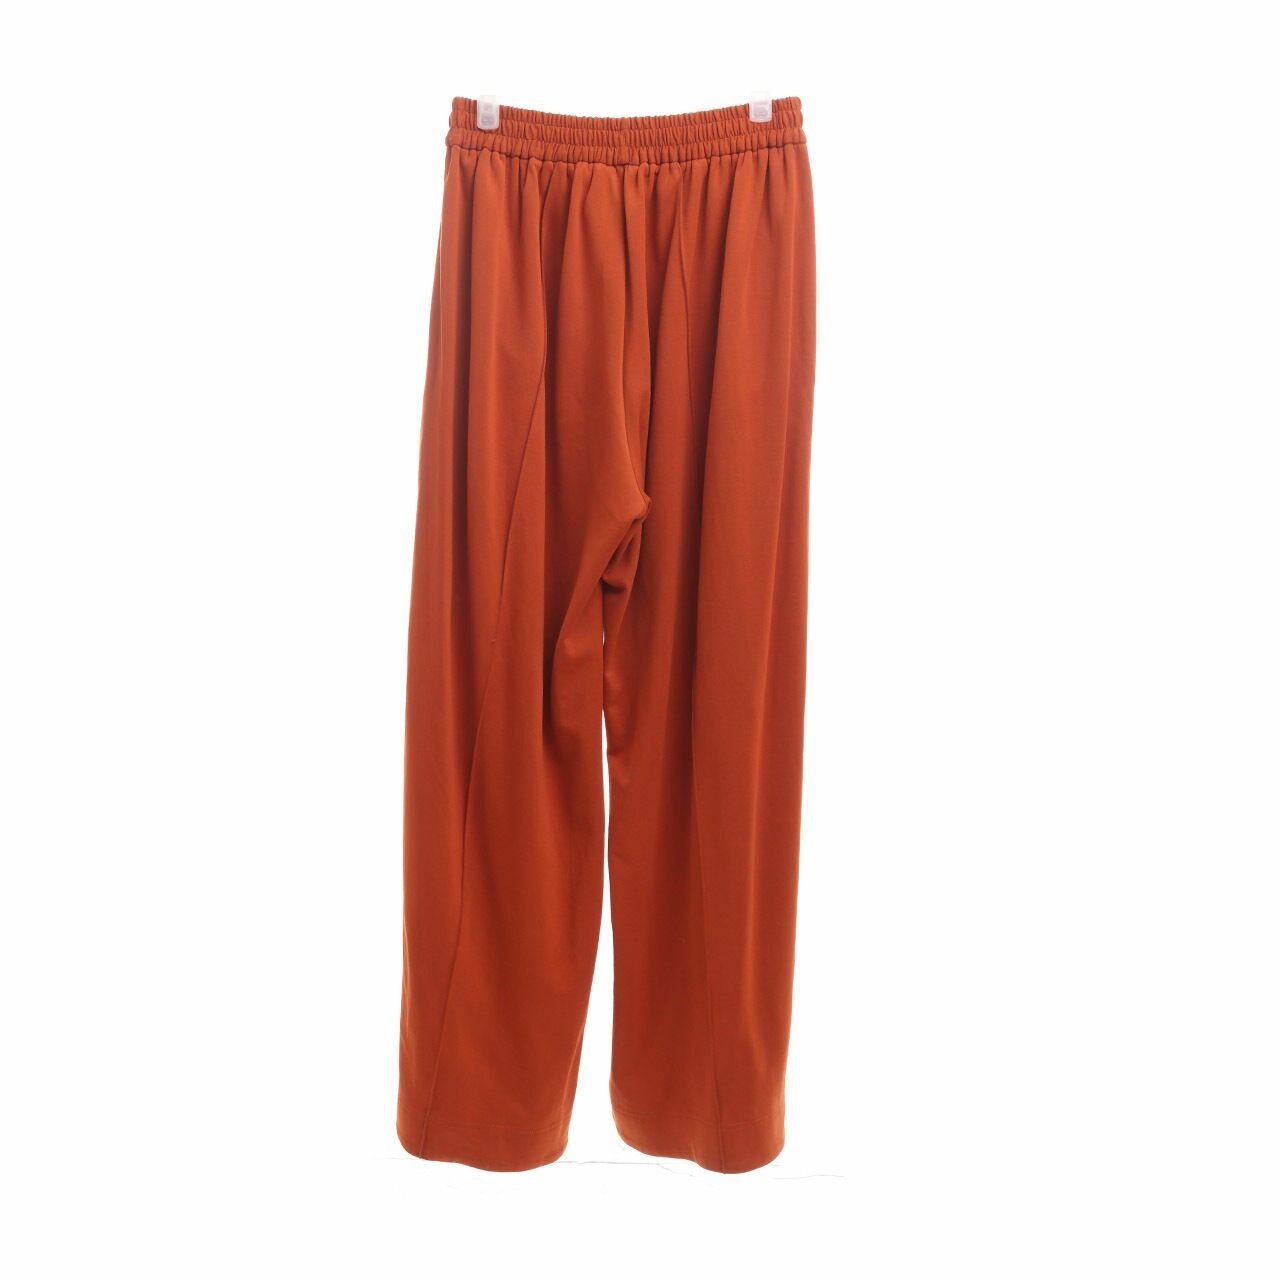 Yohji Yamamoto Y-3 Adidas 3 Stripes Orange Wide Long Pants